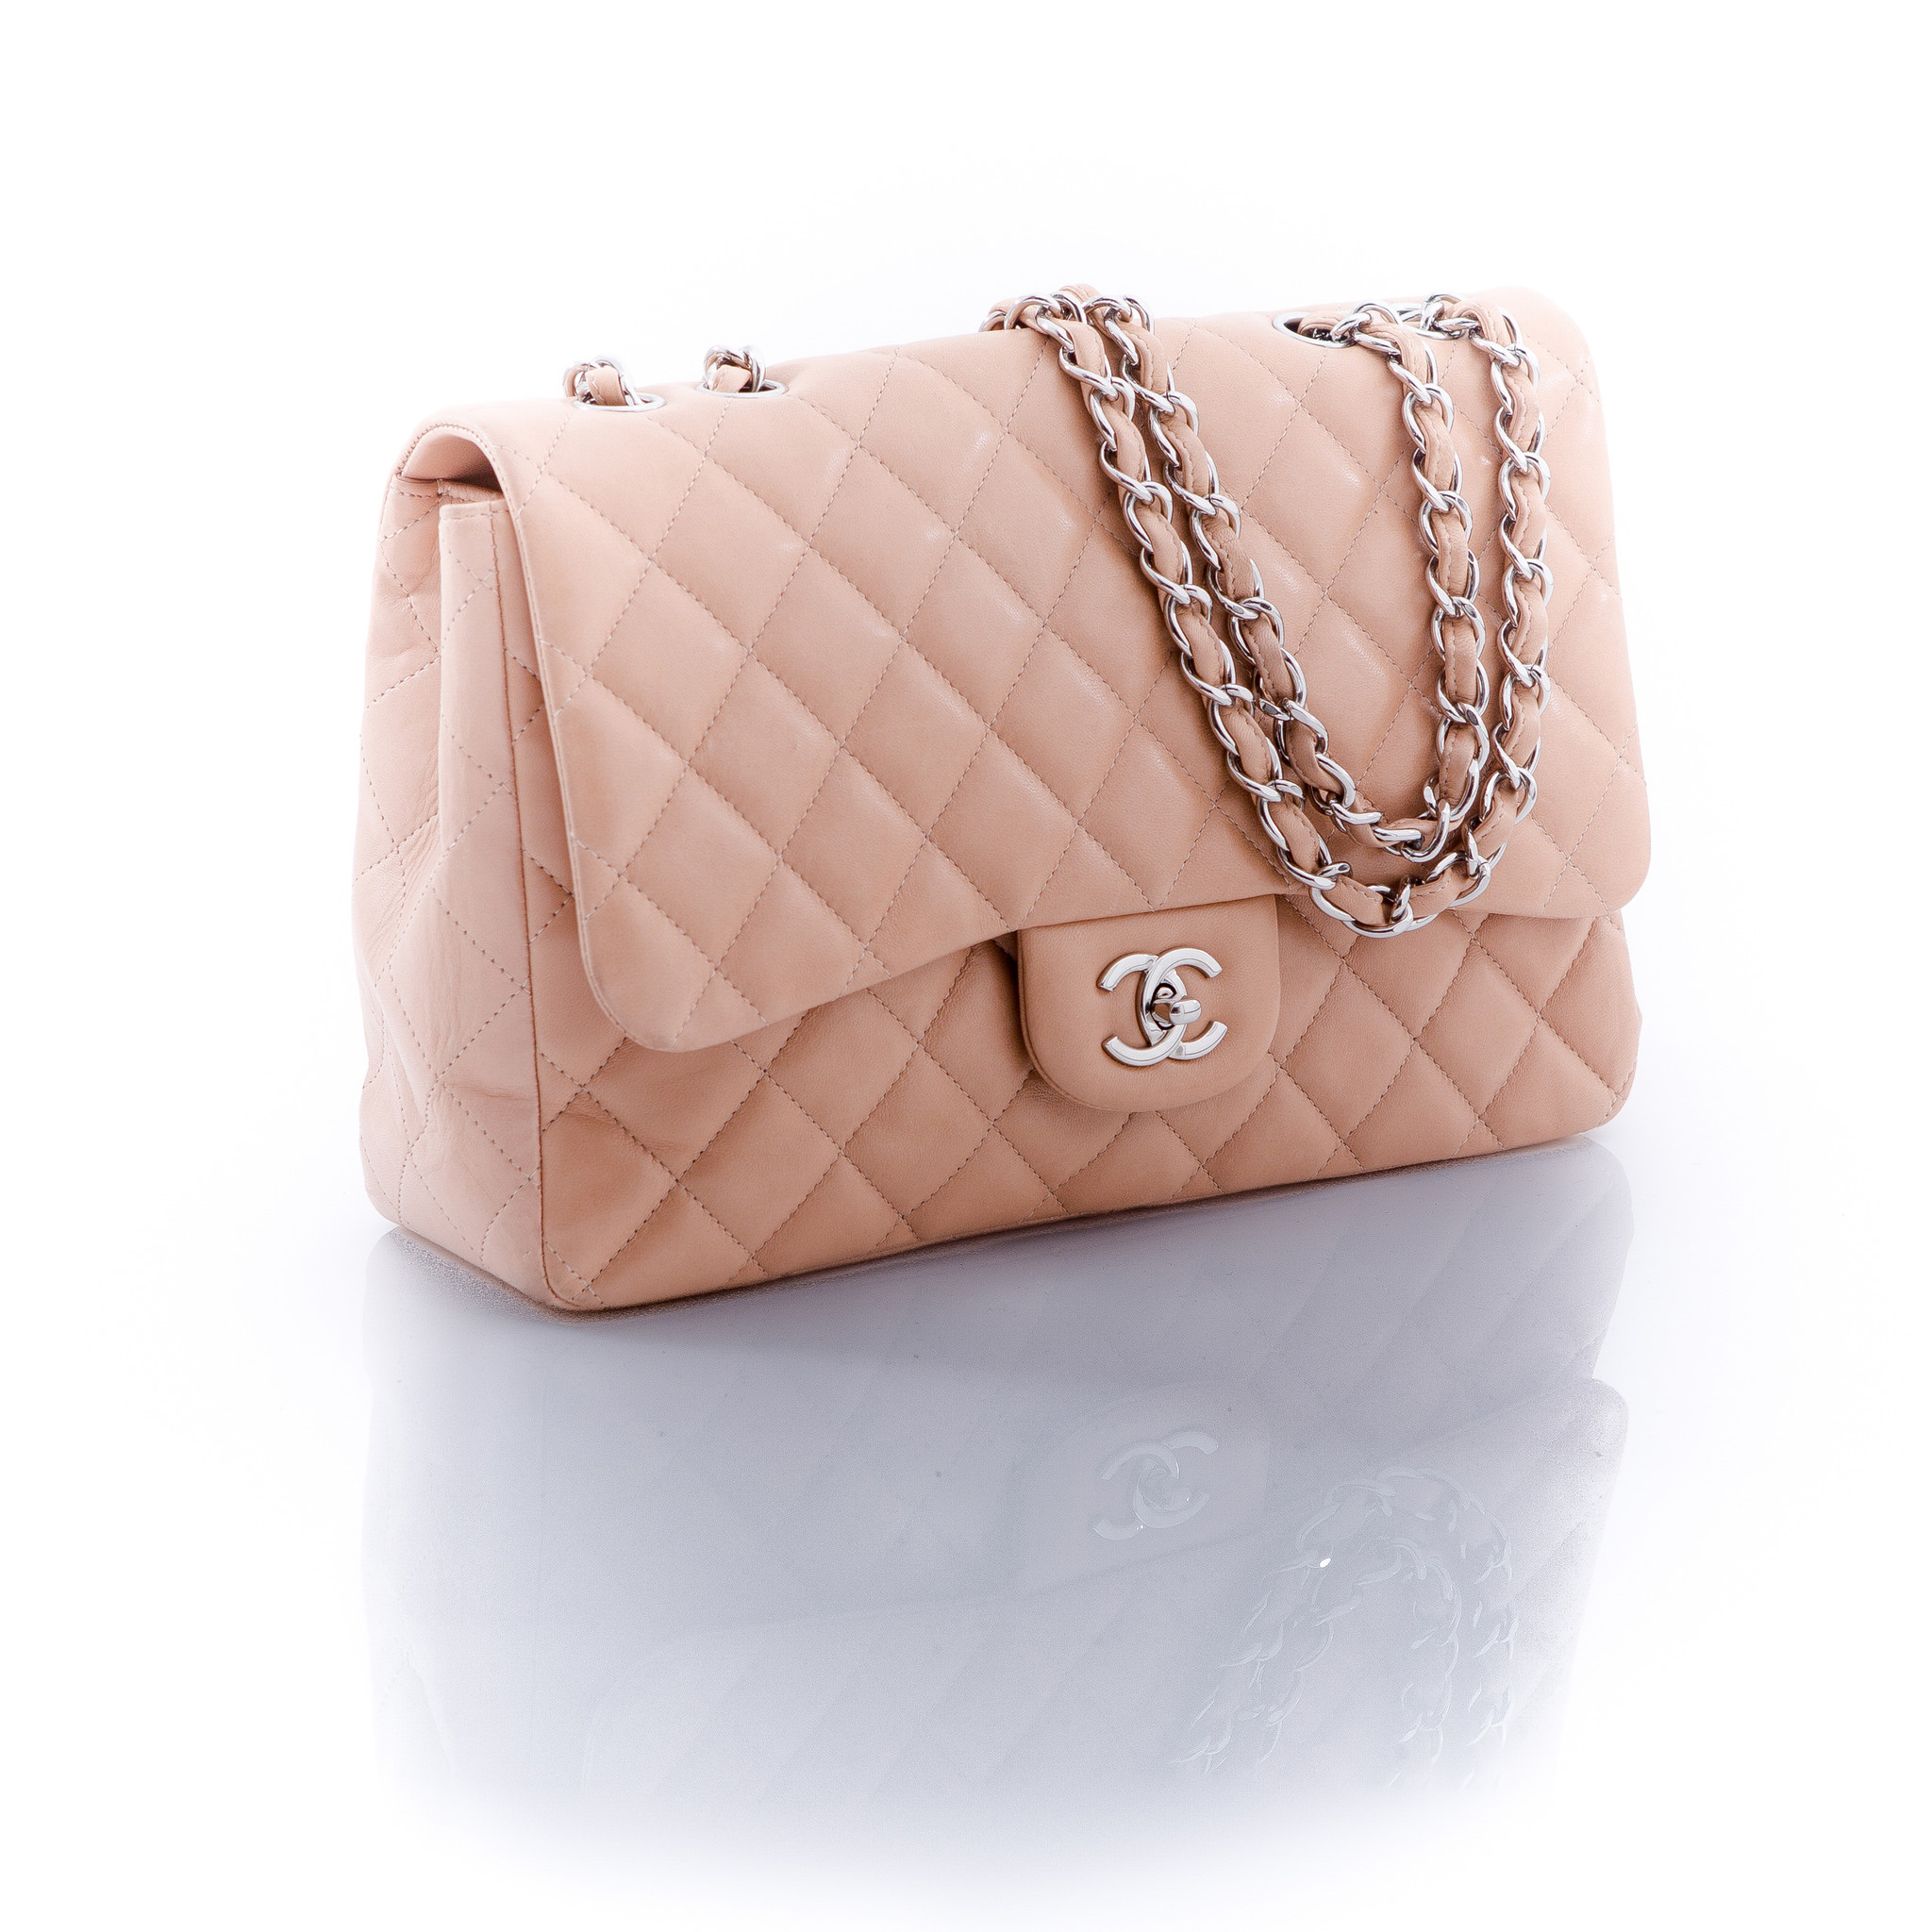 Chanel 2.55 Jumbo single flap bag in Nude - Unique Designer Pieces